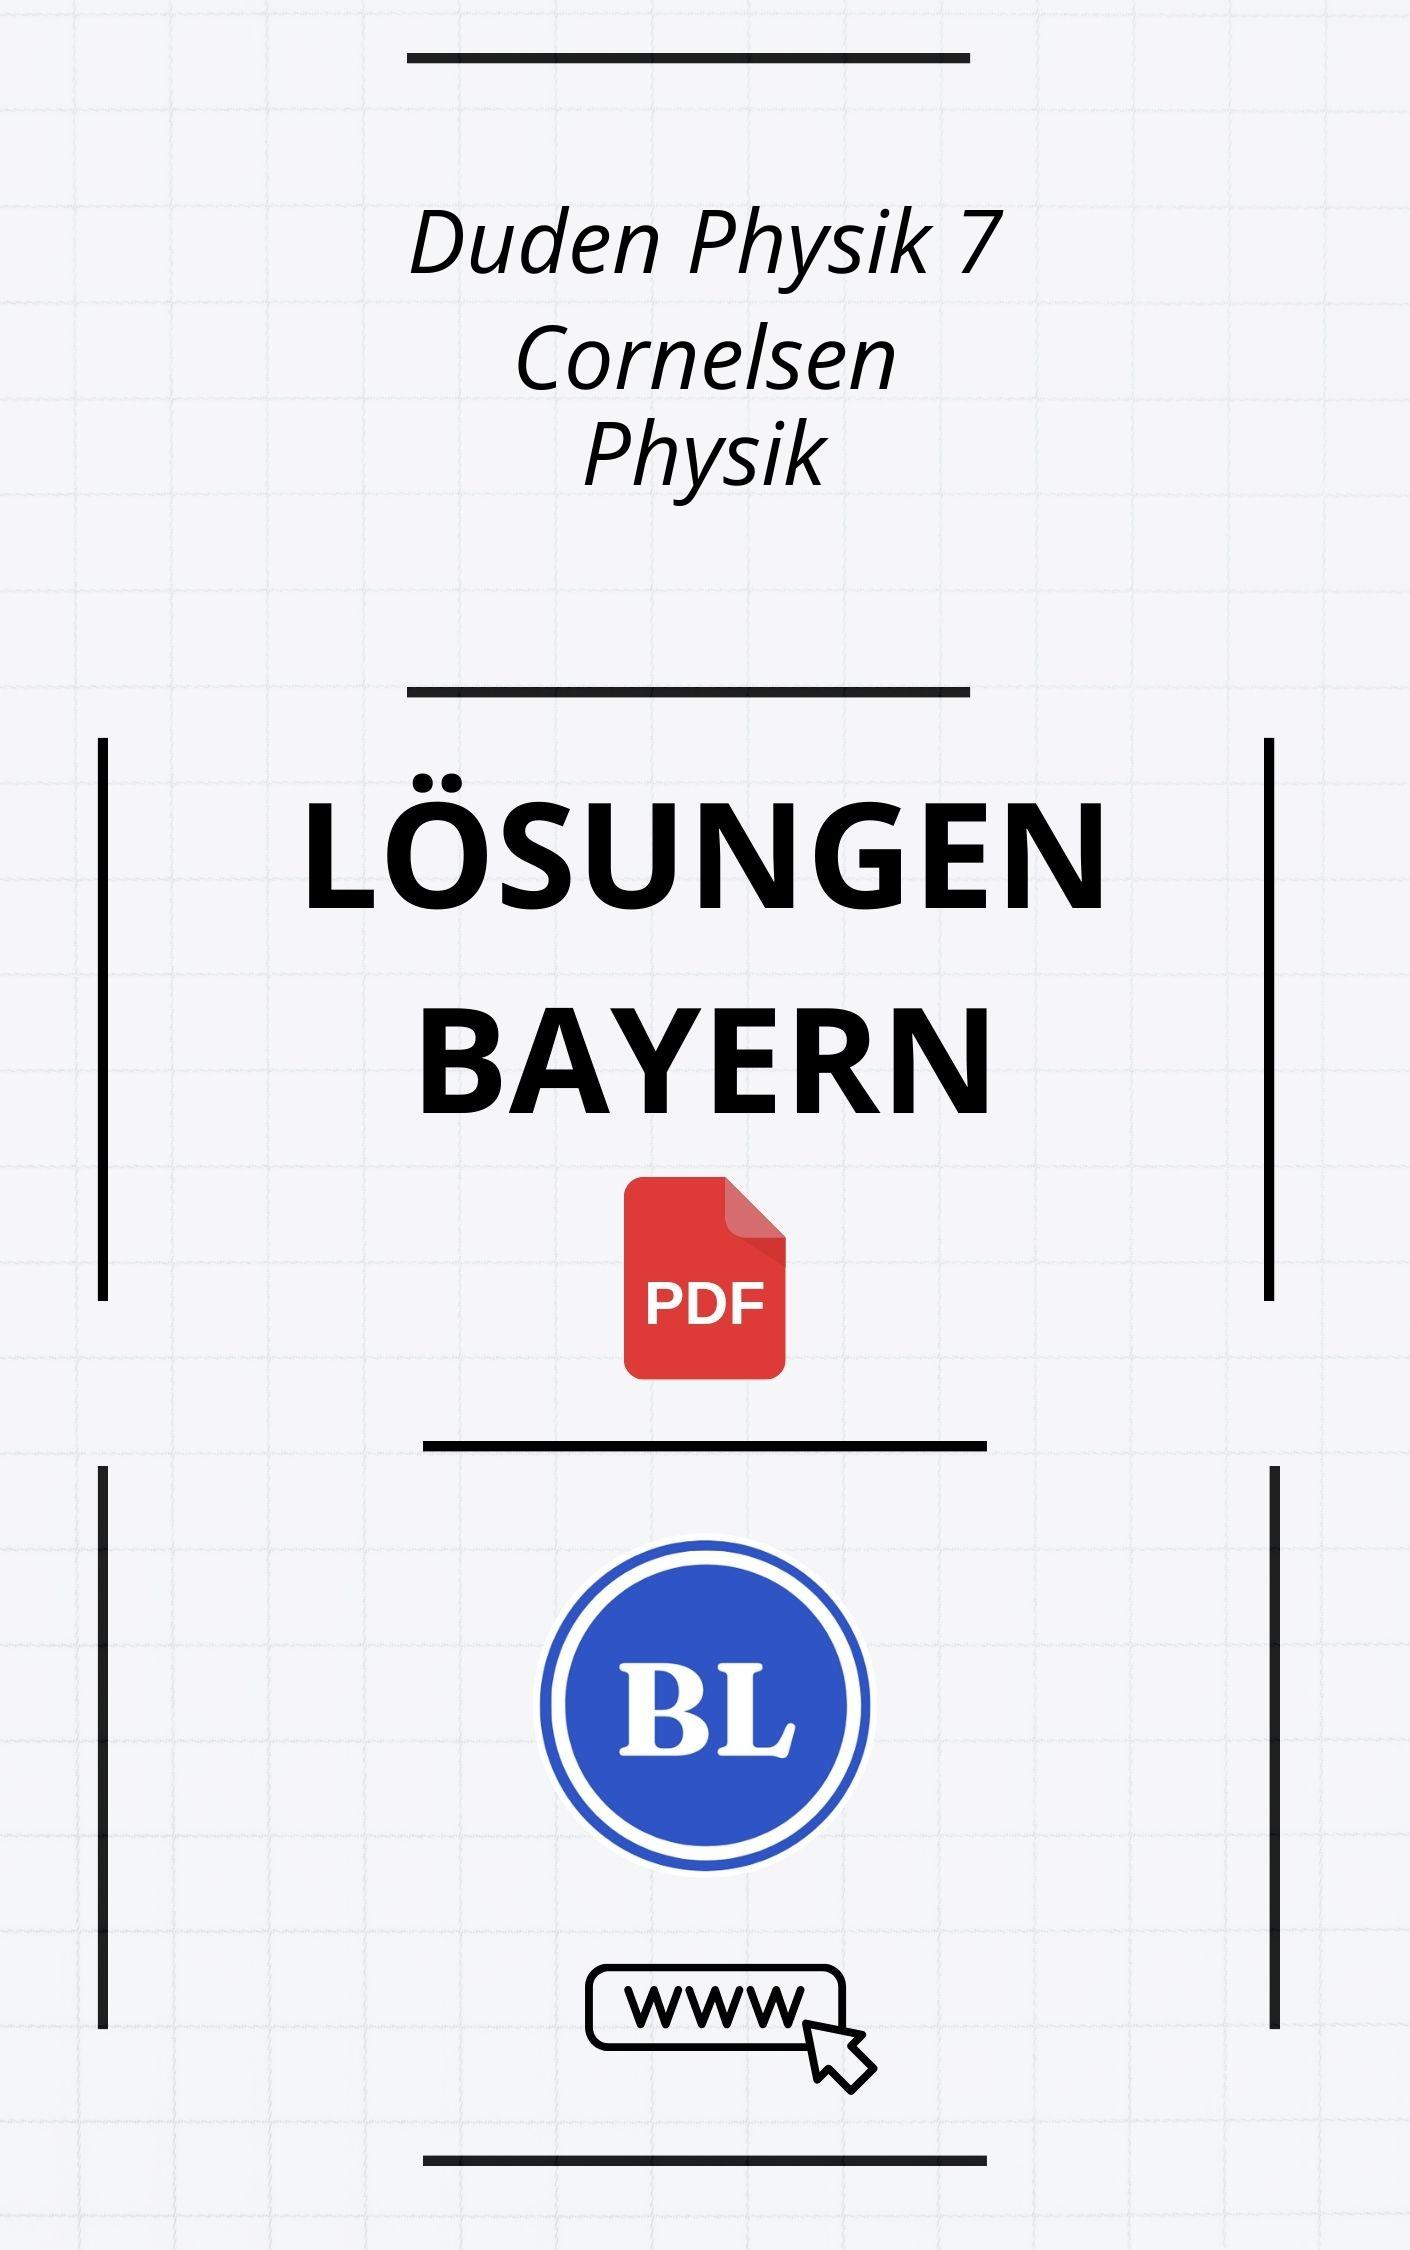 Duden Physik 7 Lösungen Bayern